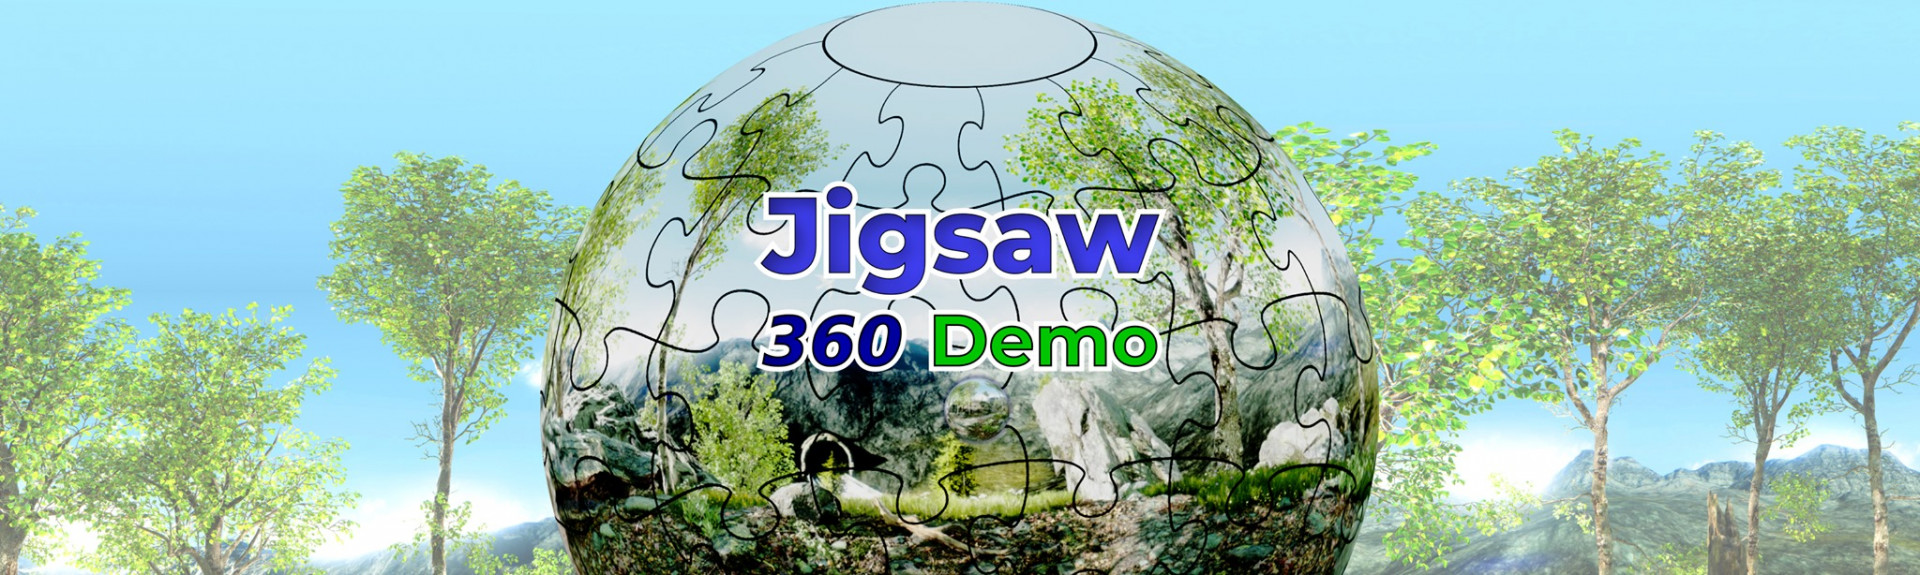 Jigsaw 360 Demo